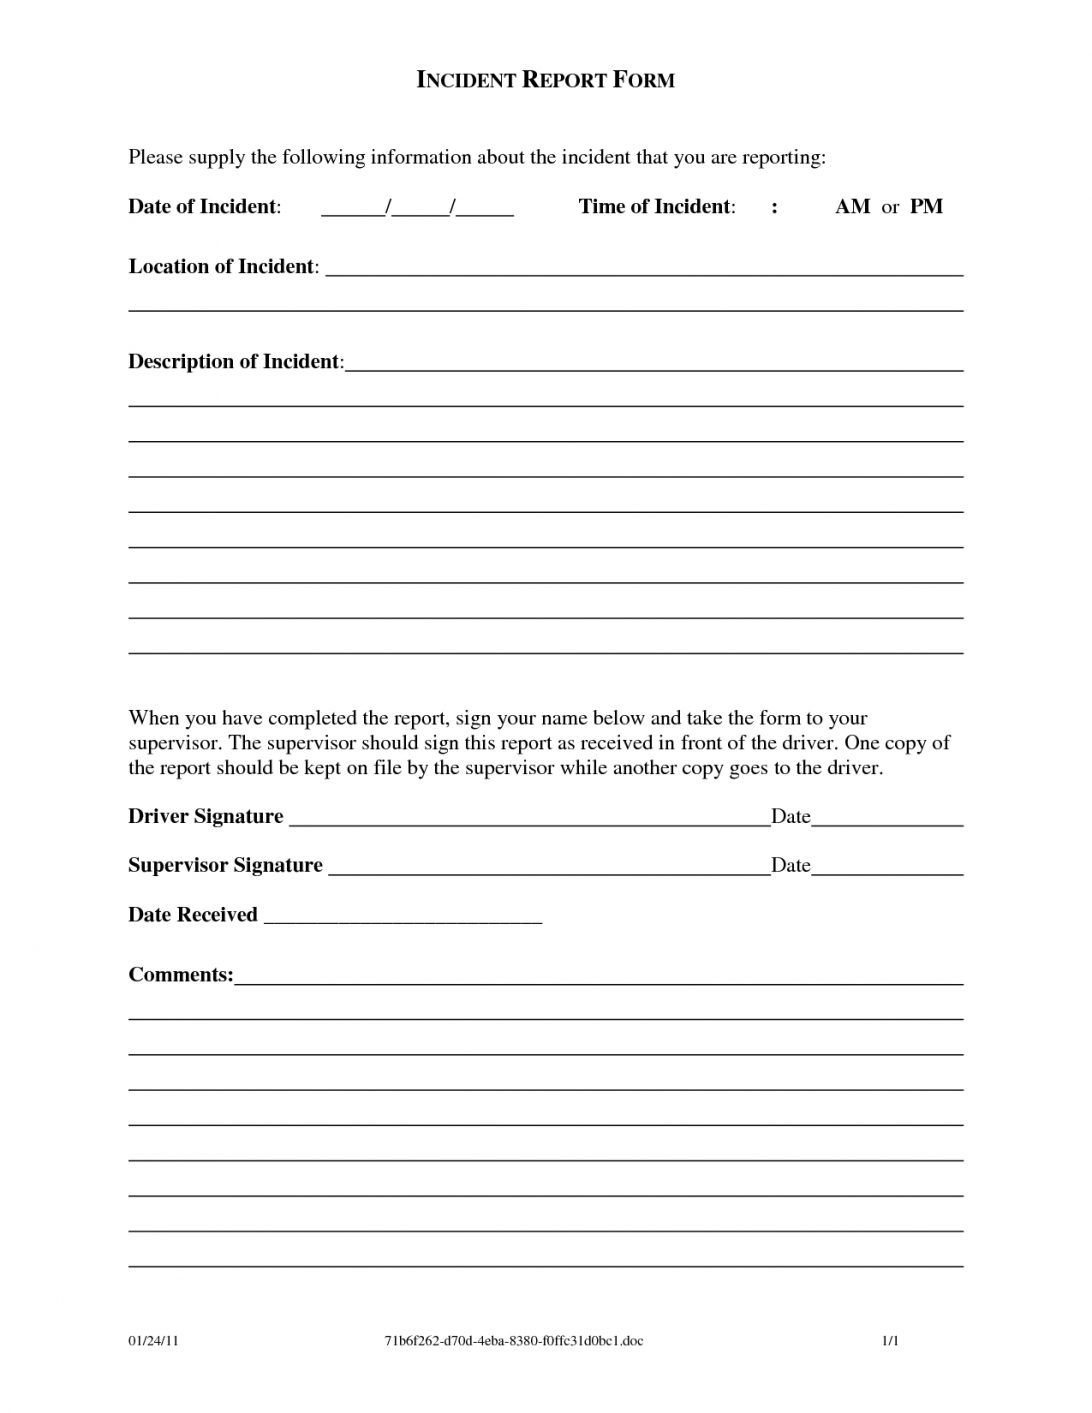 General Incident Report Form Template Victoria Australia Pertaining To Incident Report Form Template Doc